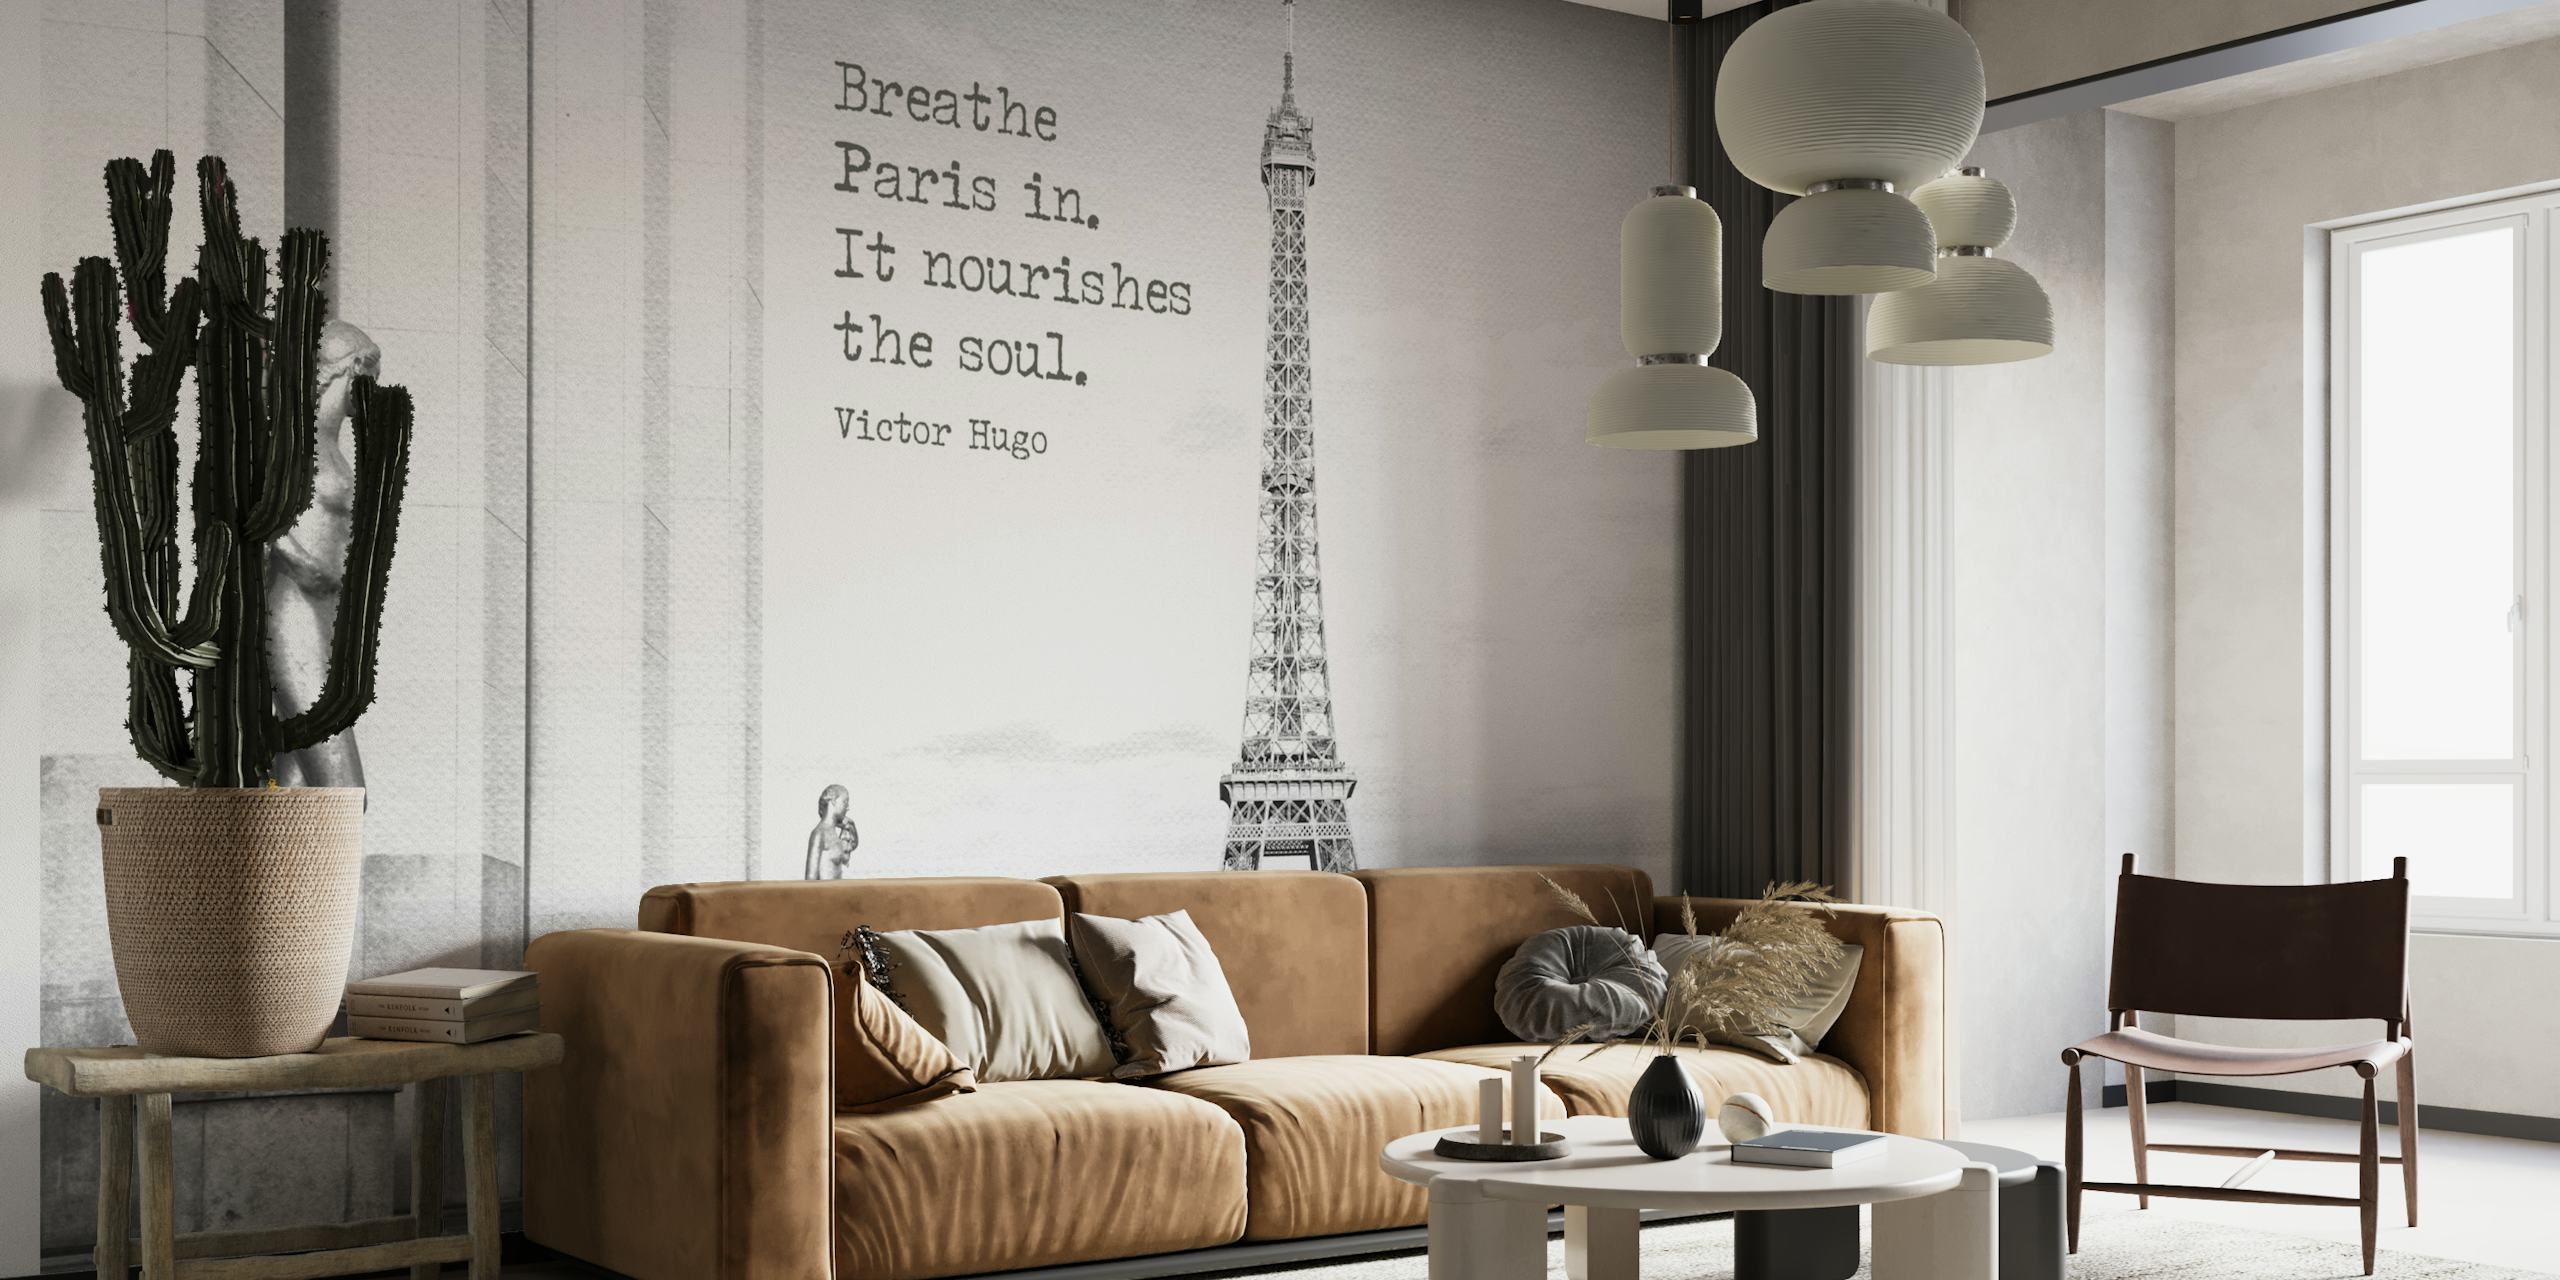 Breathe Paris in wallpaper